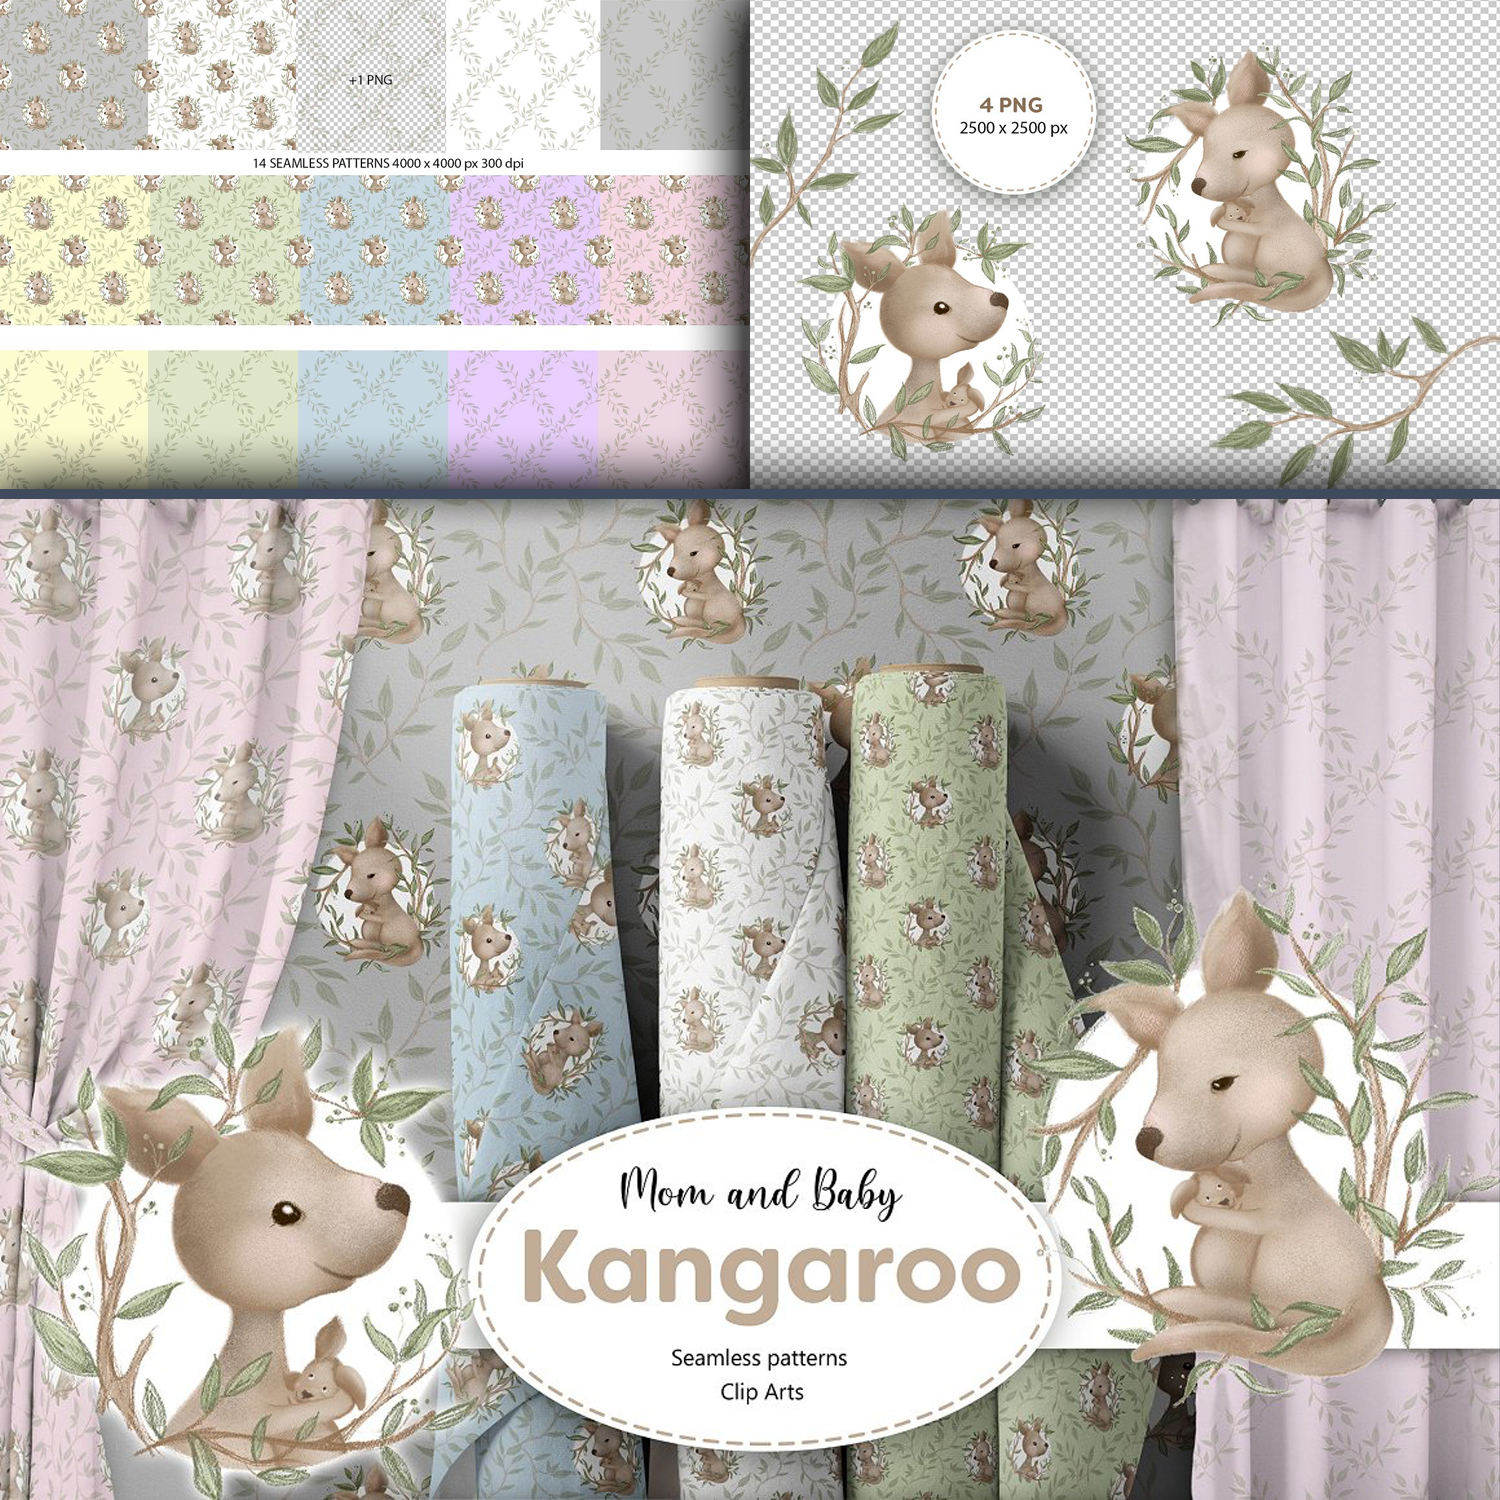 Kangaroo Seamless Patterns Clipart Design cover image.